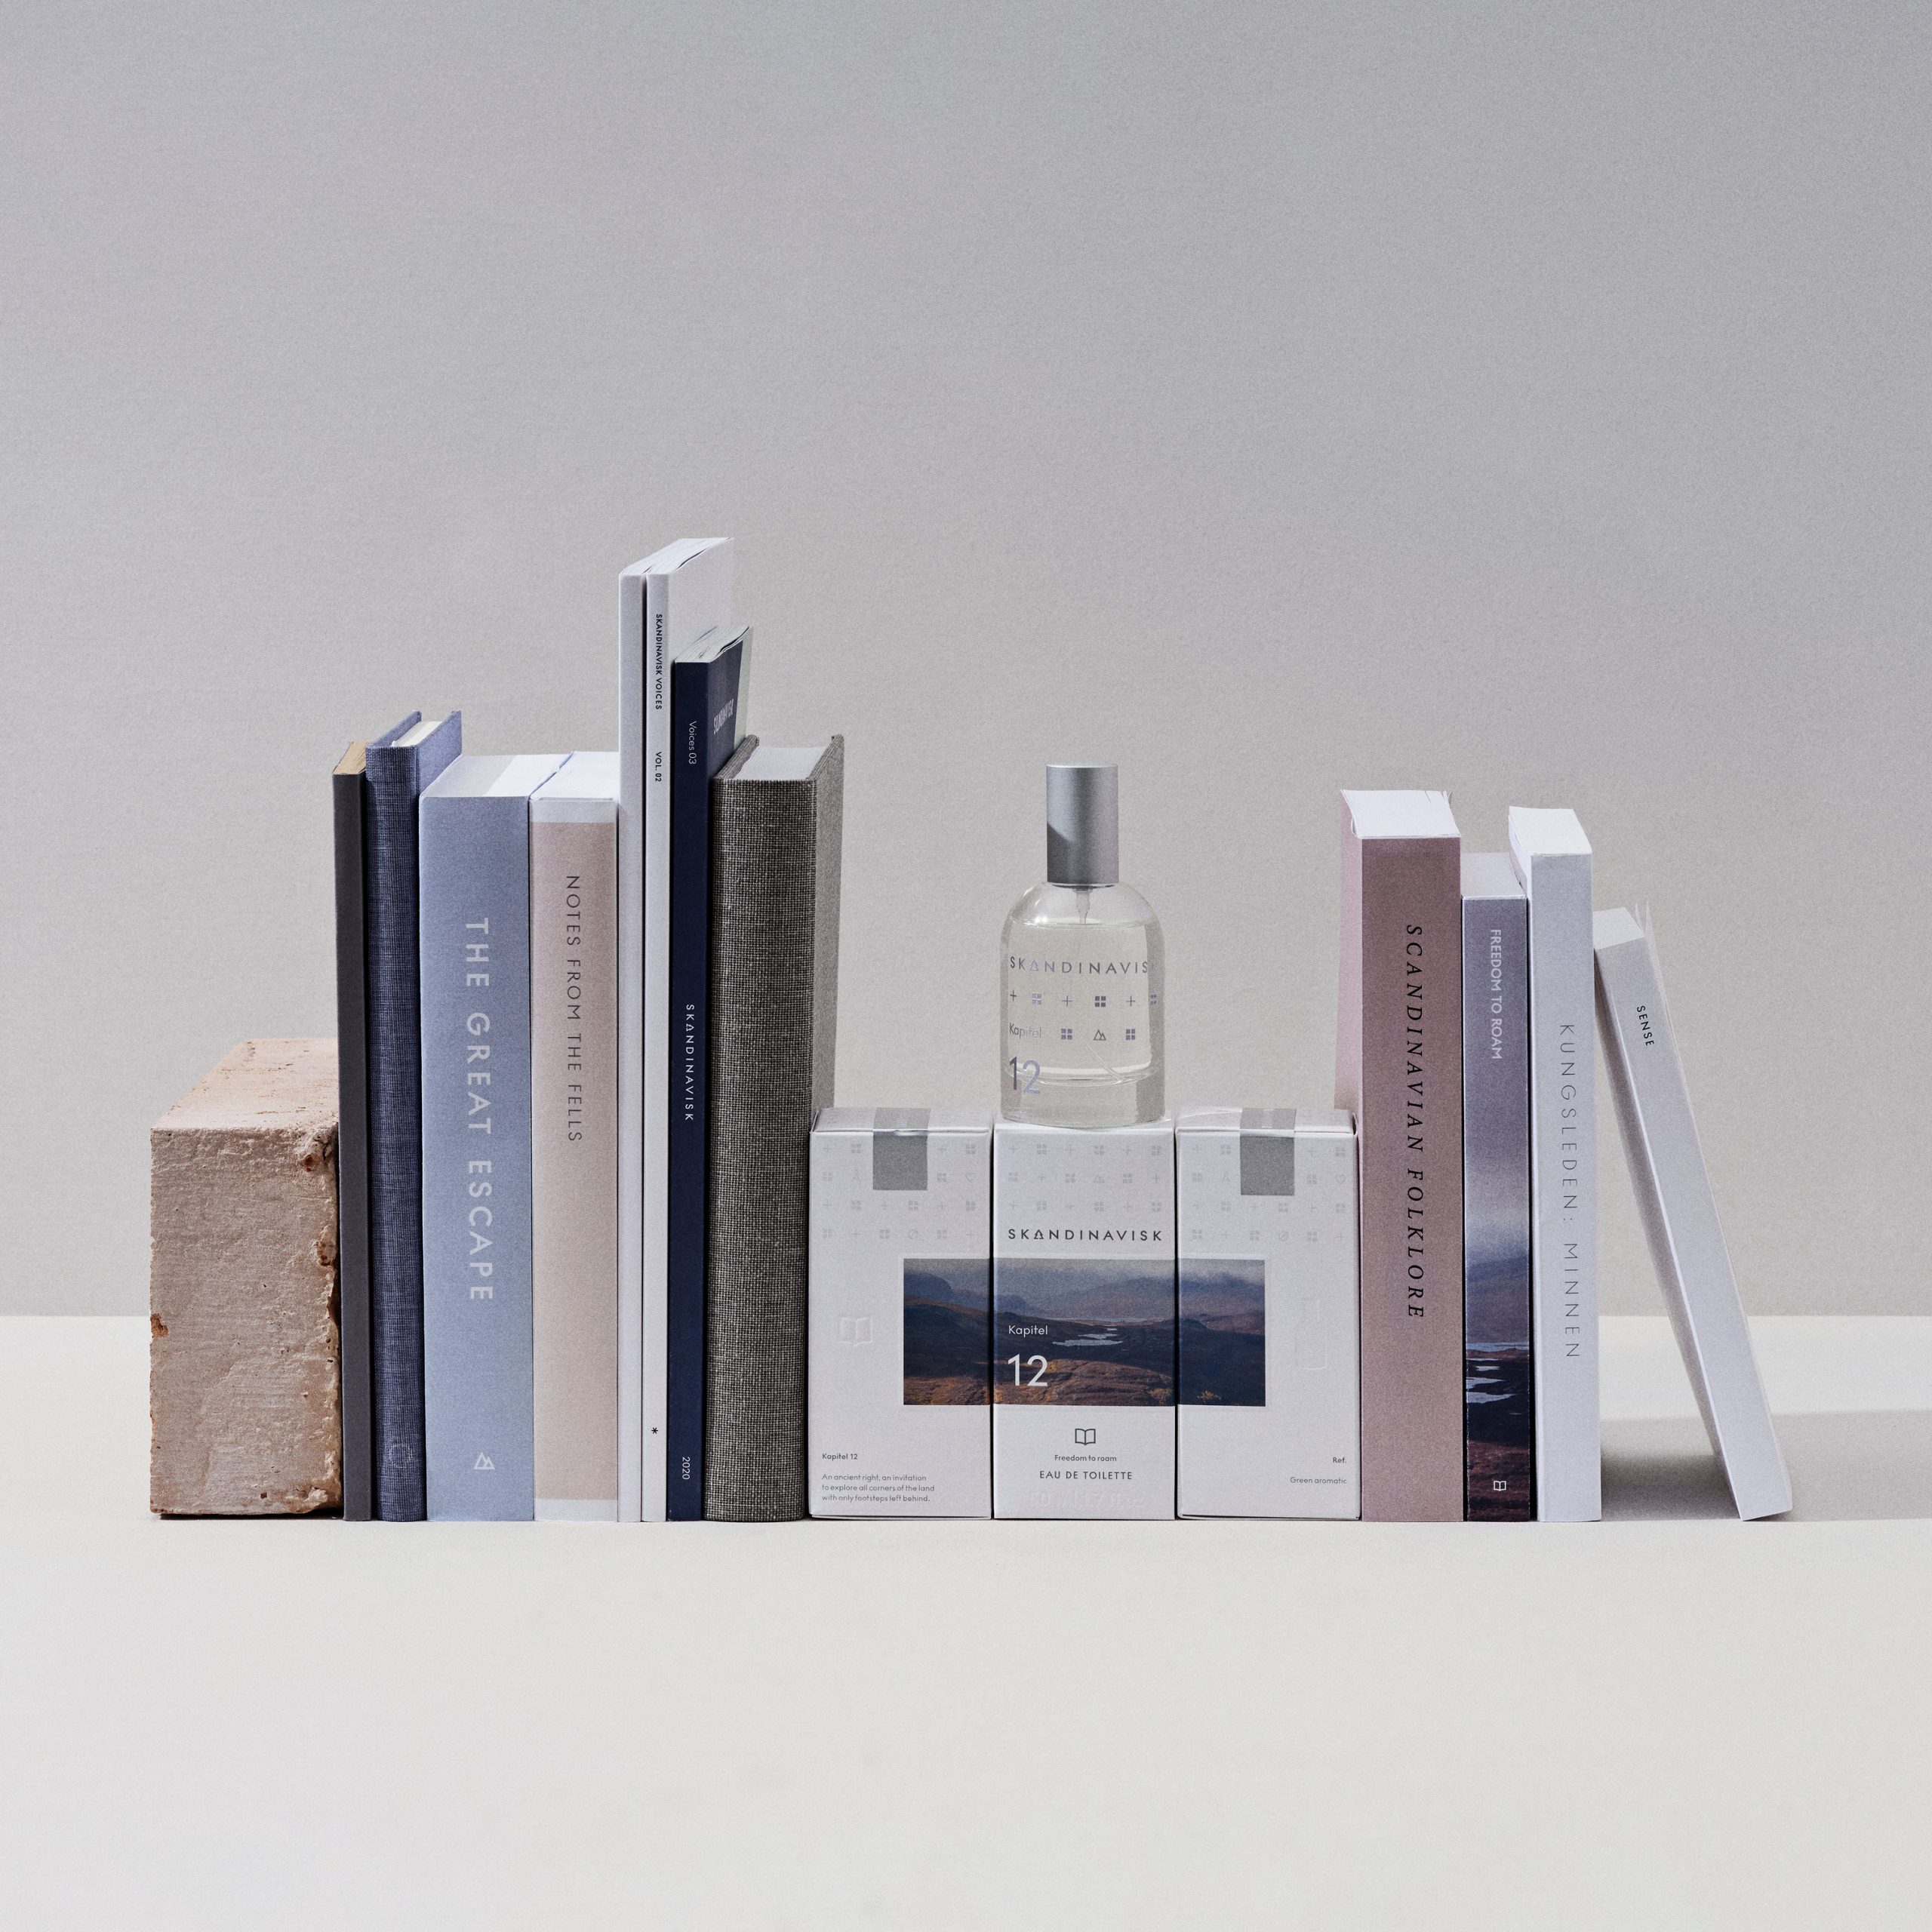 Skandinavisk’s Kapitel 12 perfume on a shelf surrounded by Scandinavian books